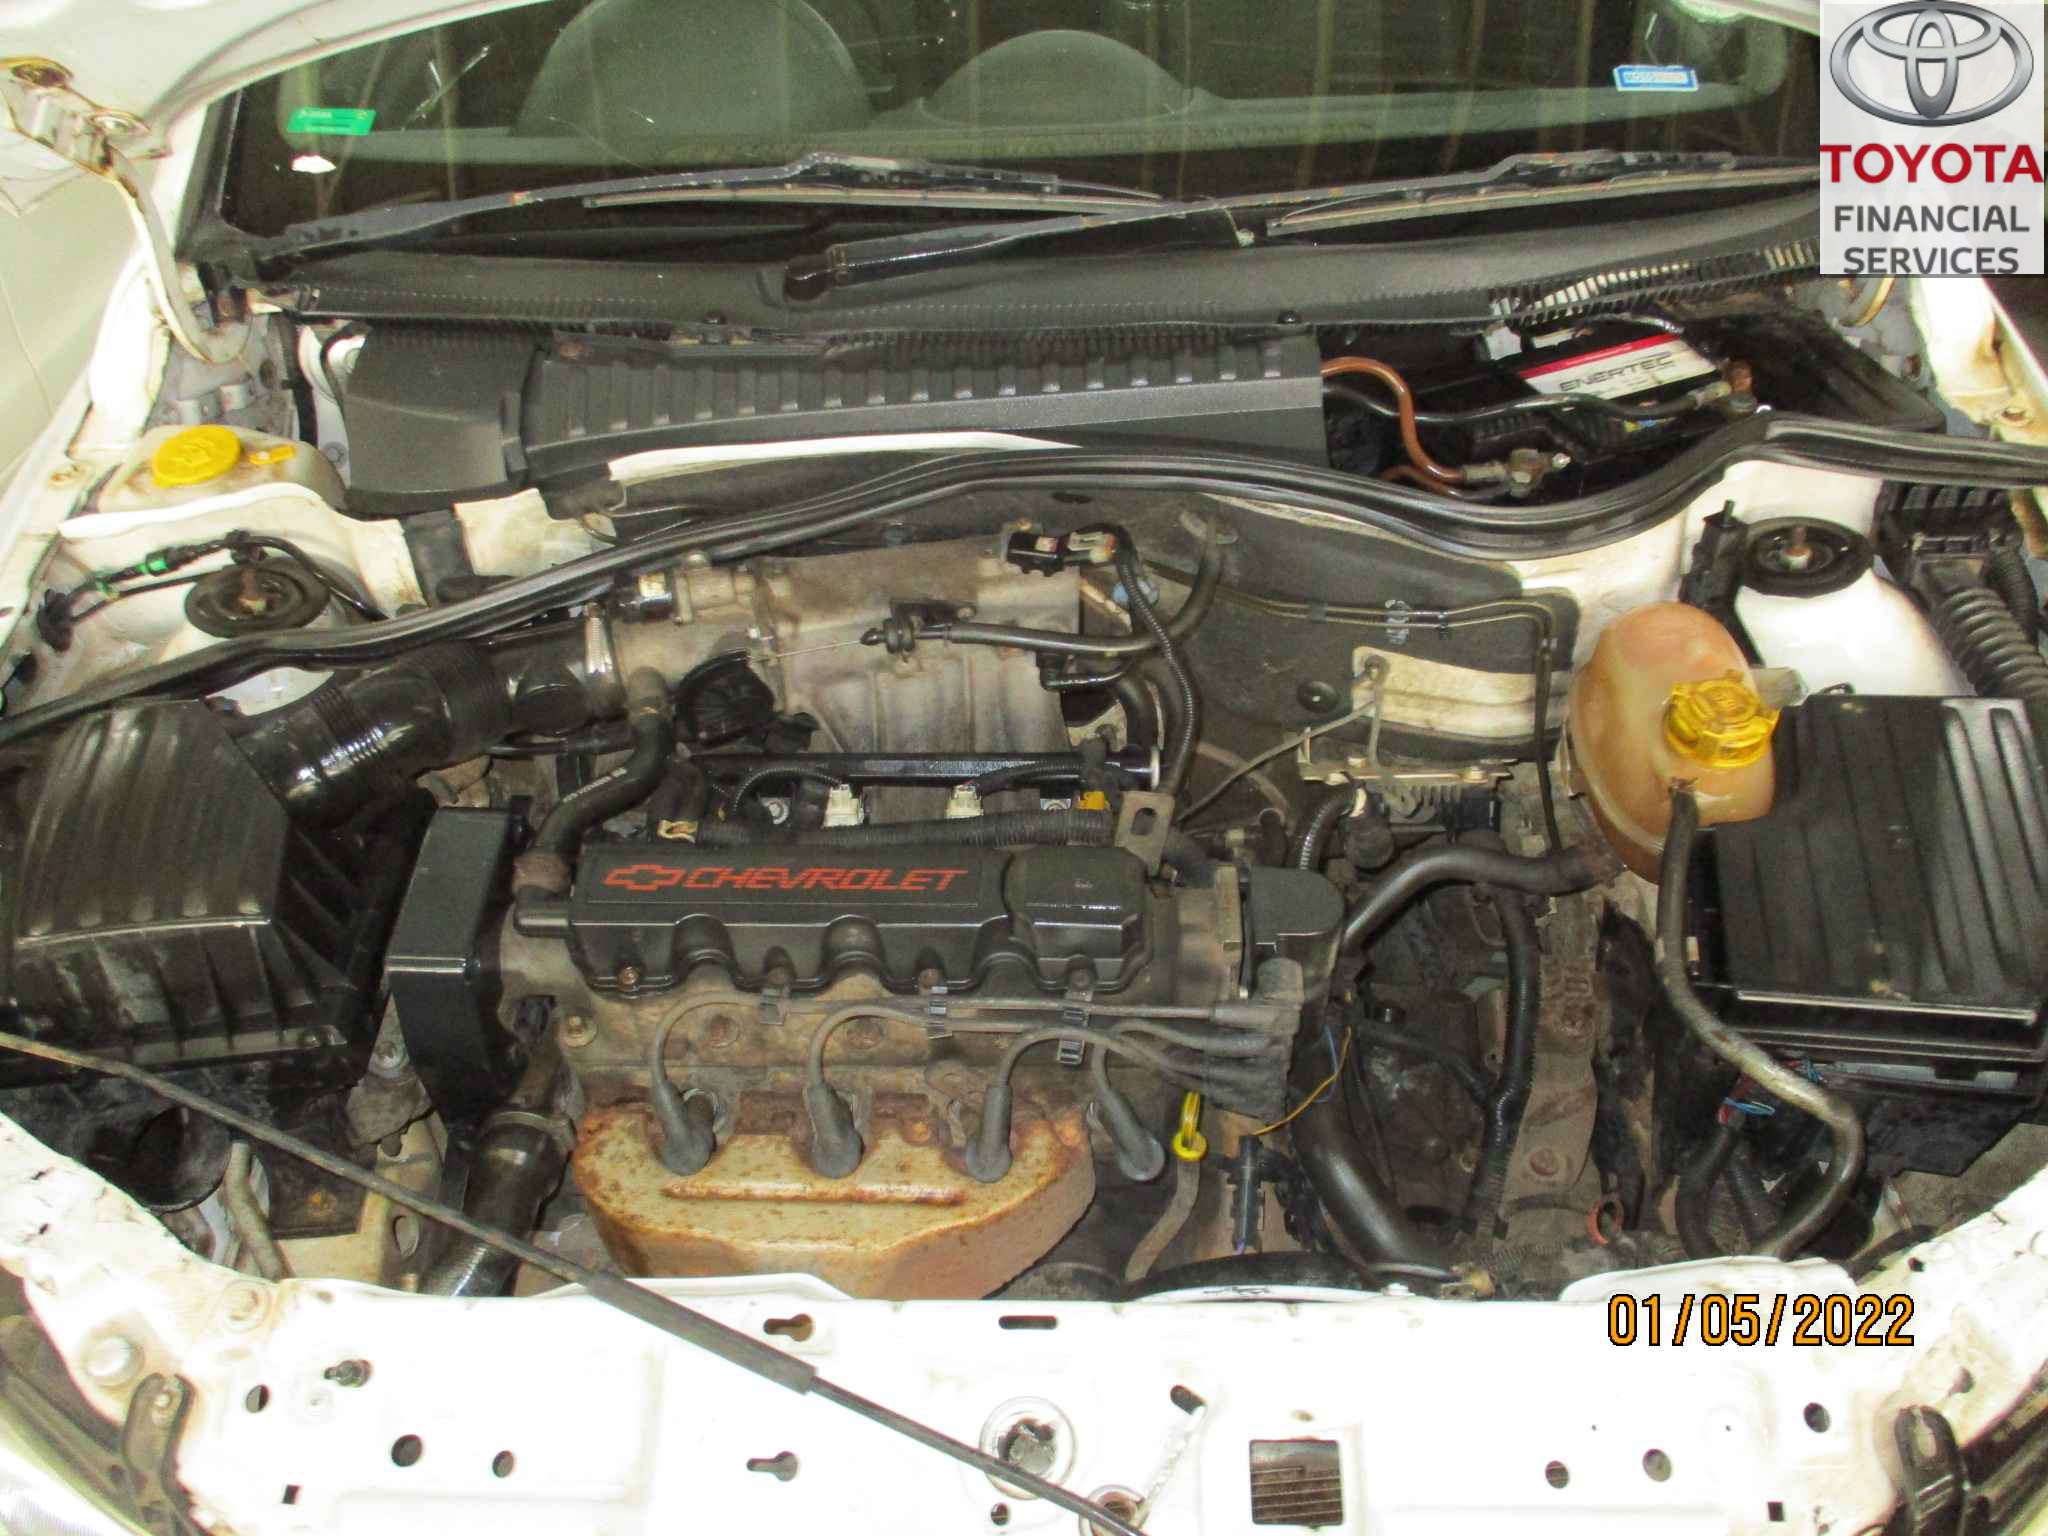 Chevrolet Corsa Utility 2010 images (2048x1536)